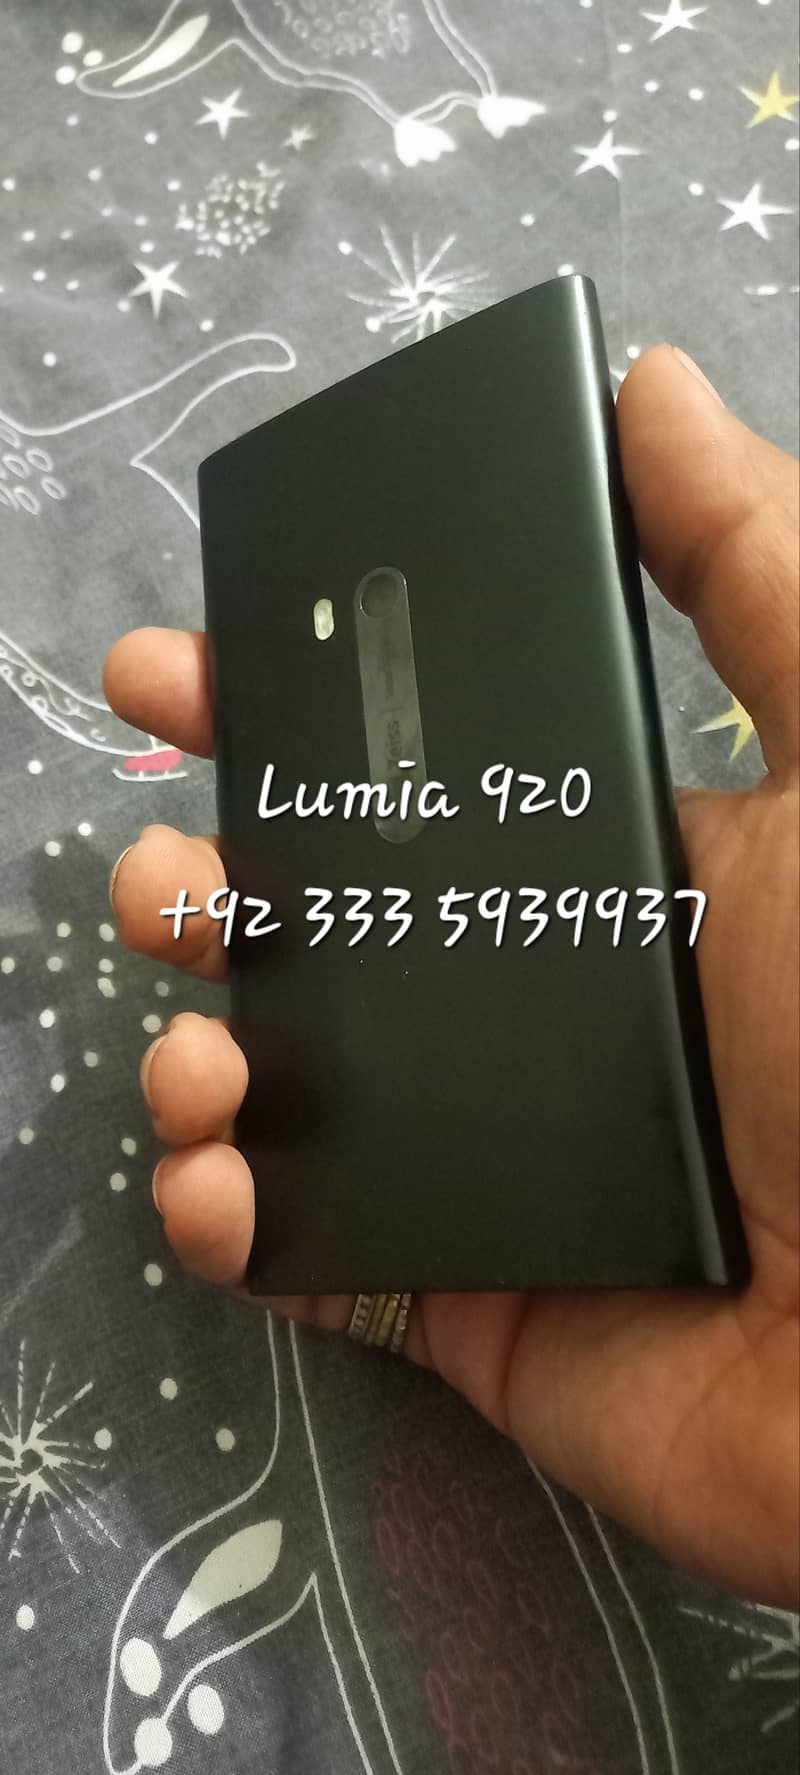 Nokia Lumia 920 (Like New) 1